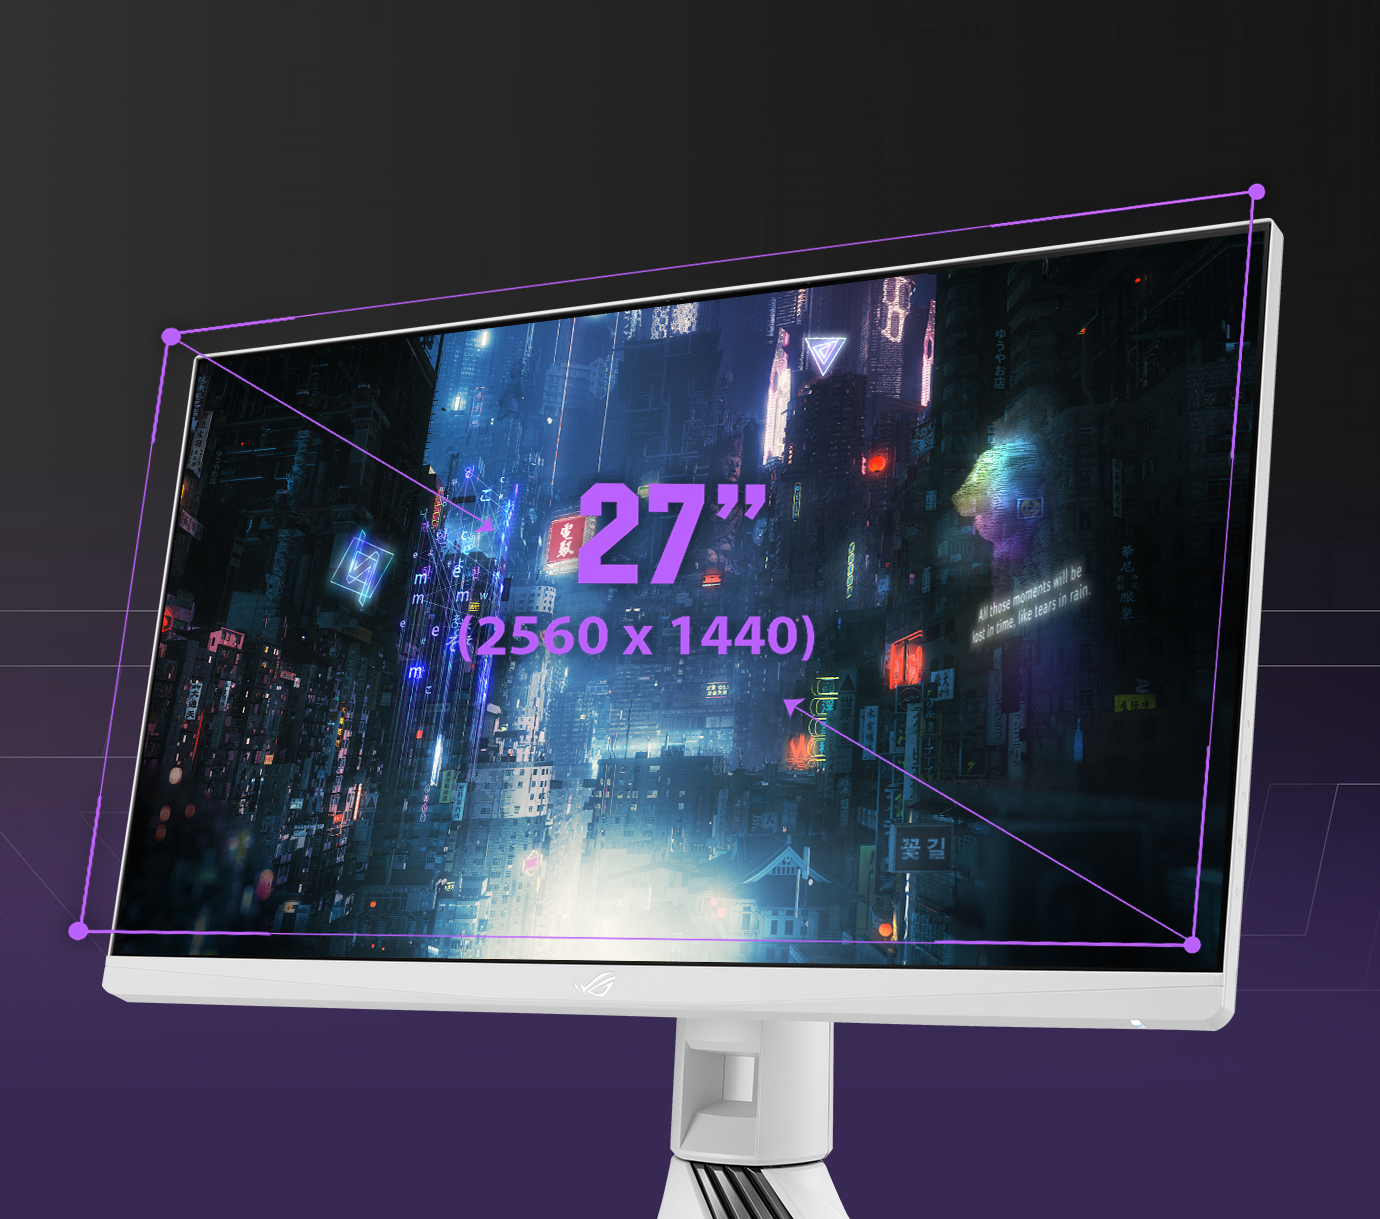 ROG Strix XG279Q-W  Gaming monitors｜ROG - Republic of Gamers｜ROG Global